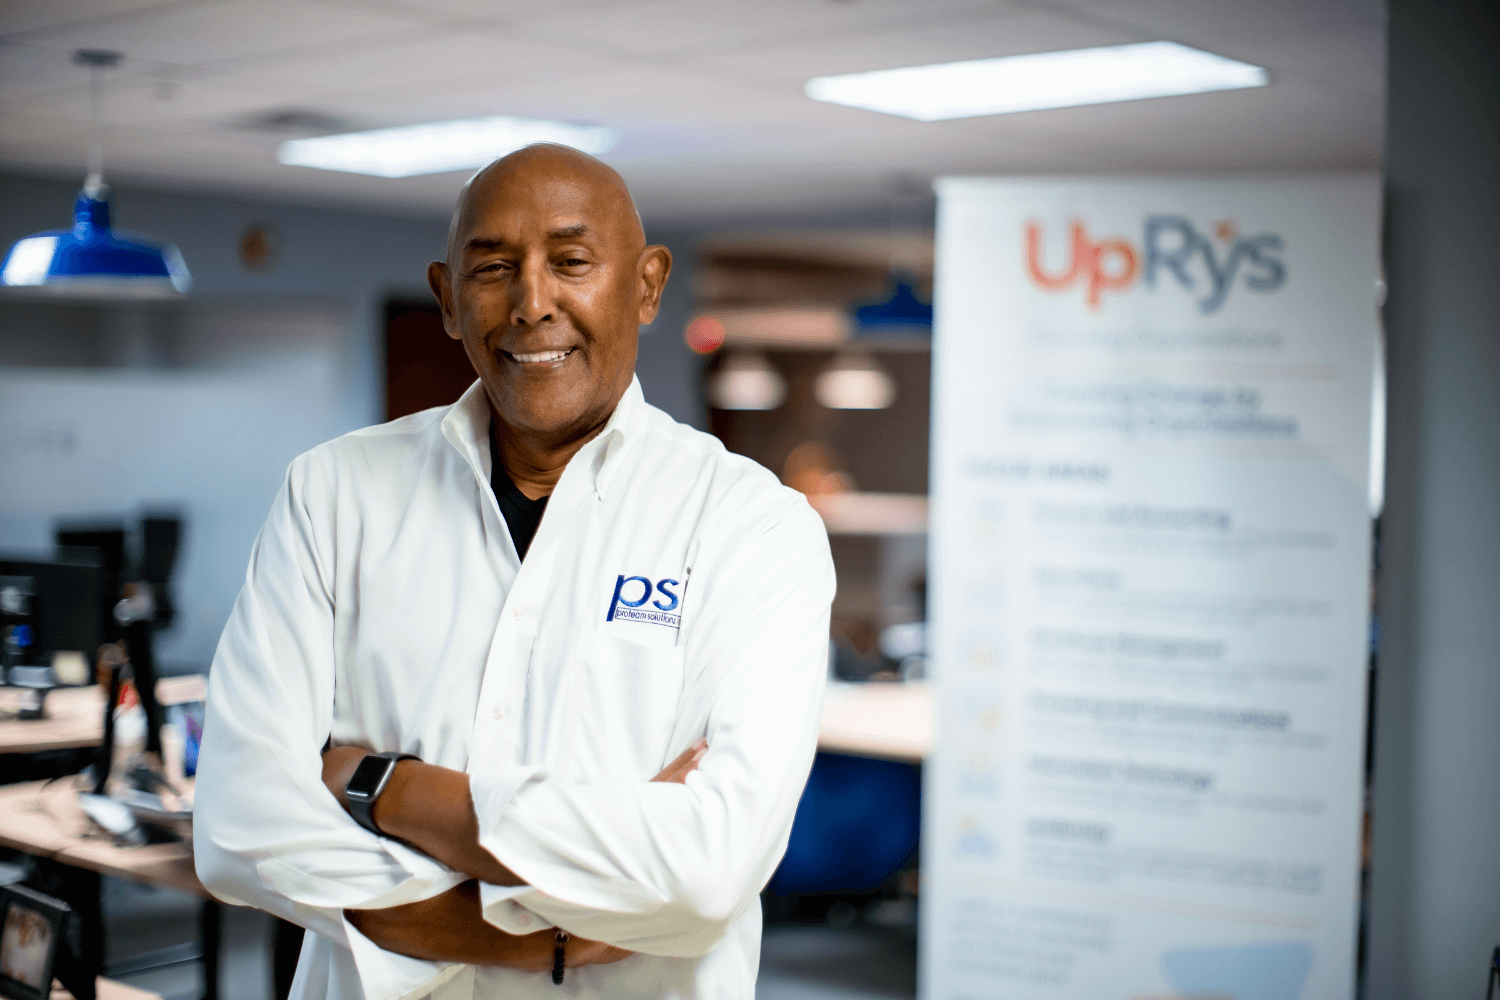 UpRys-founder-Keith-Stevens